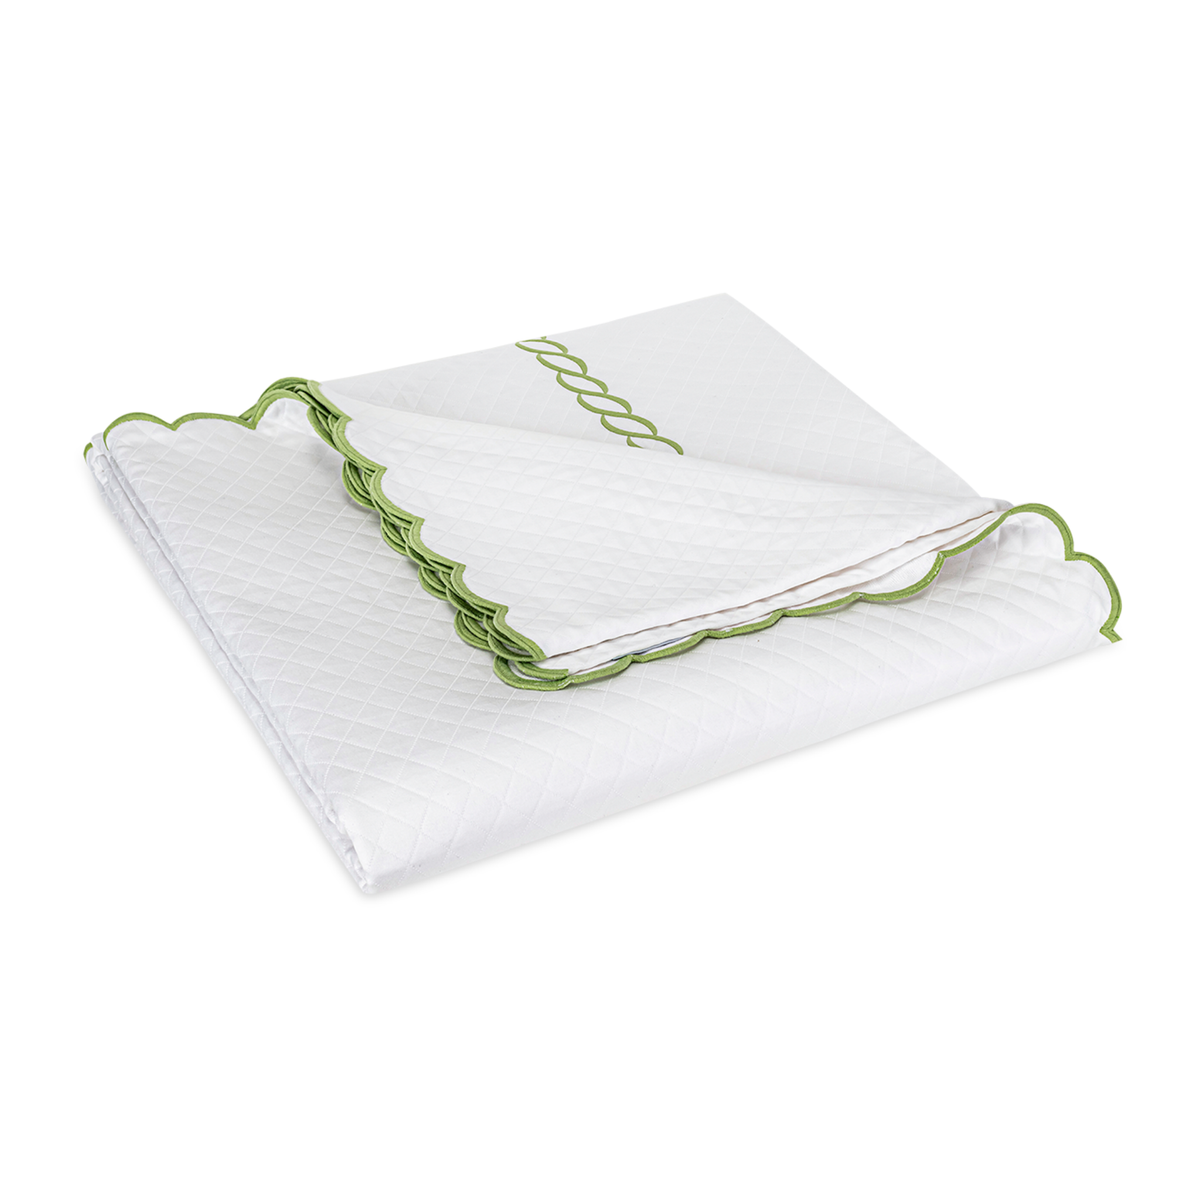 Silo of Matouk Classic Chain Scallop Matelassé Bedding Folded Coverlet in Spring Green 